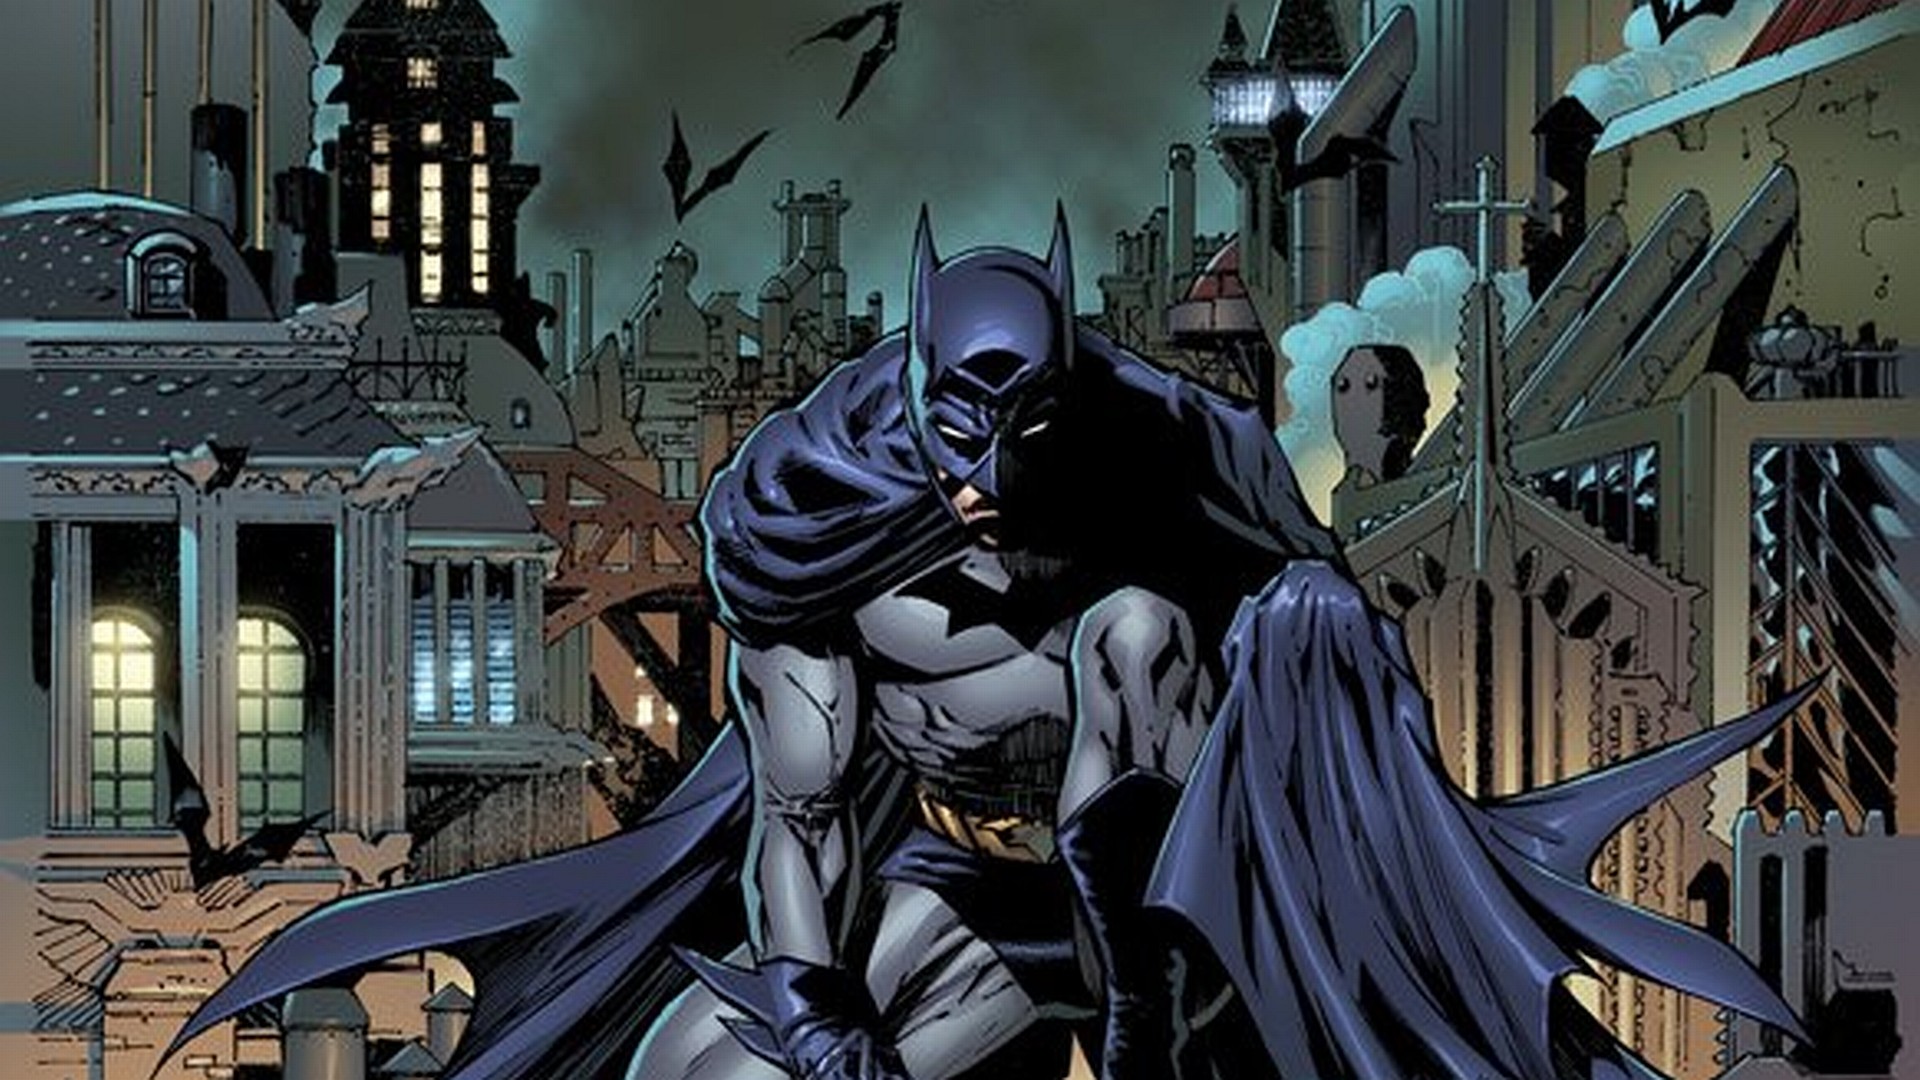 Download - - Dick Grayson Batman Art , HD Wallpaper & Backgrounds